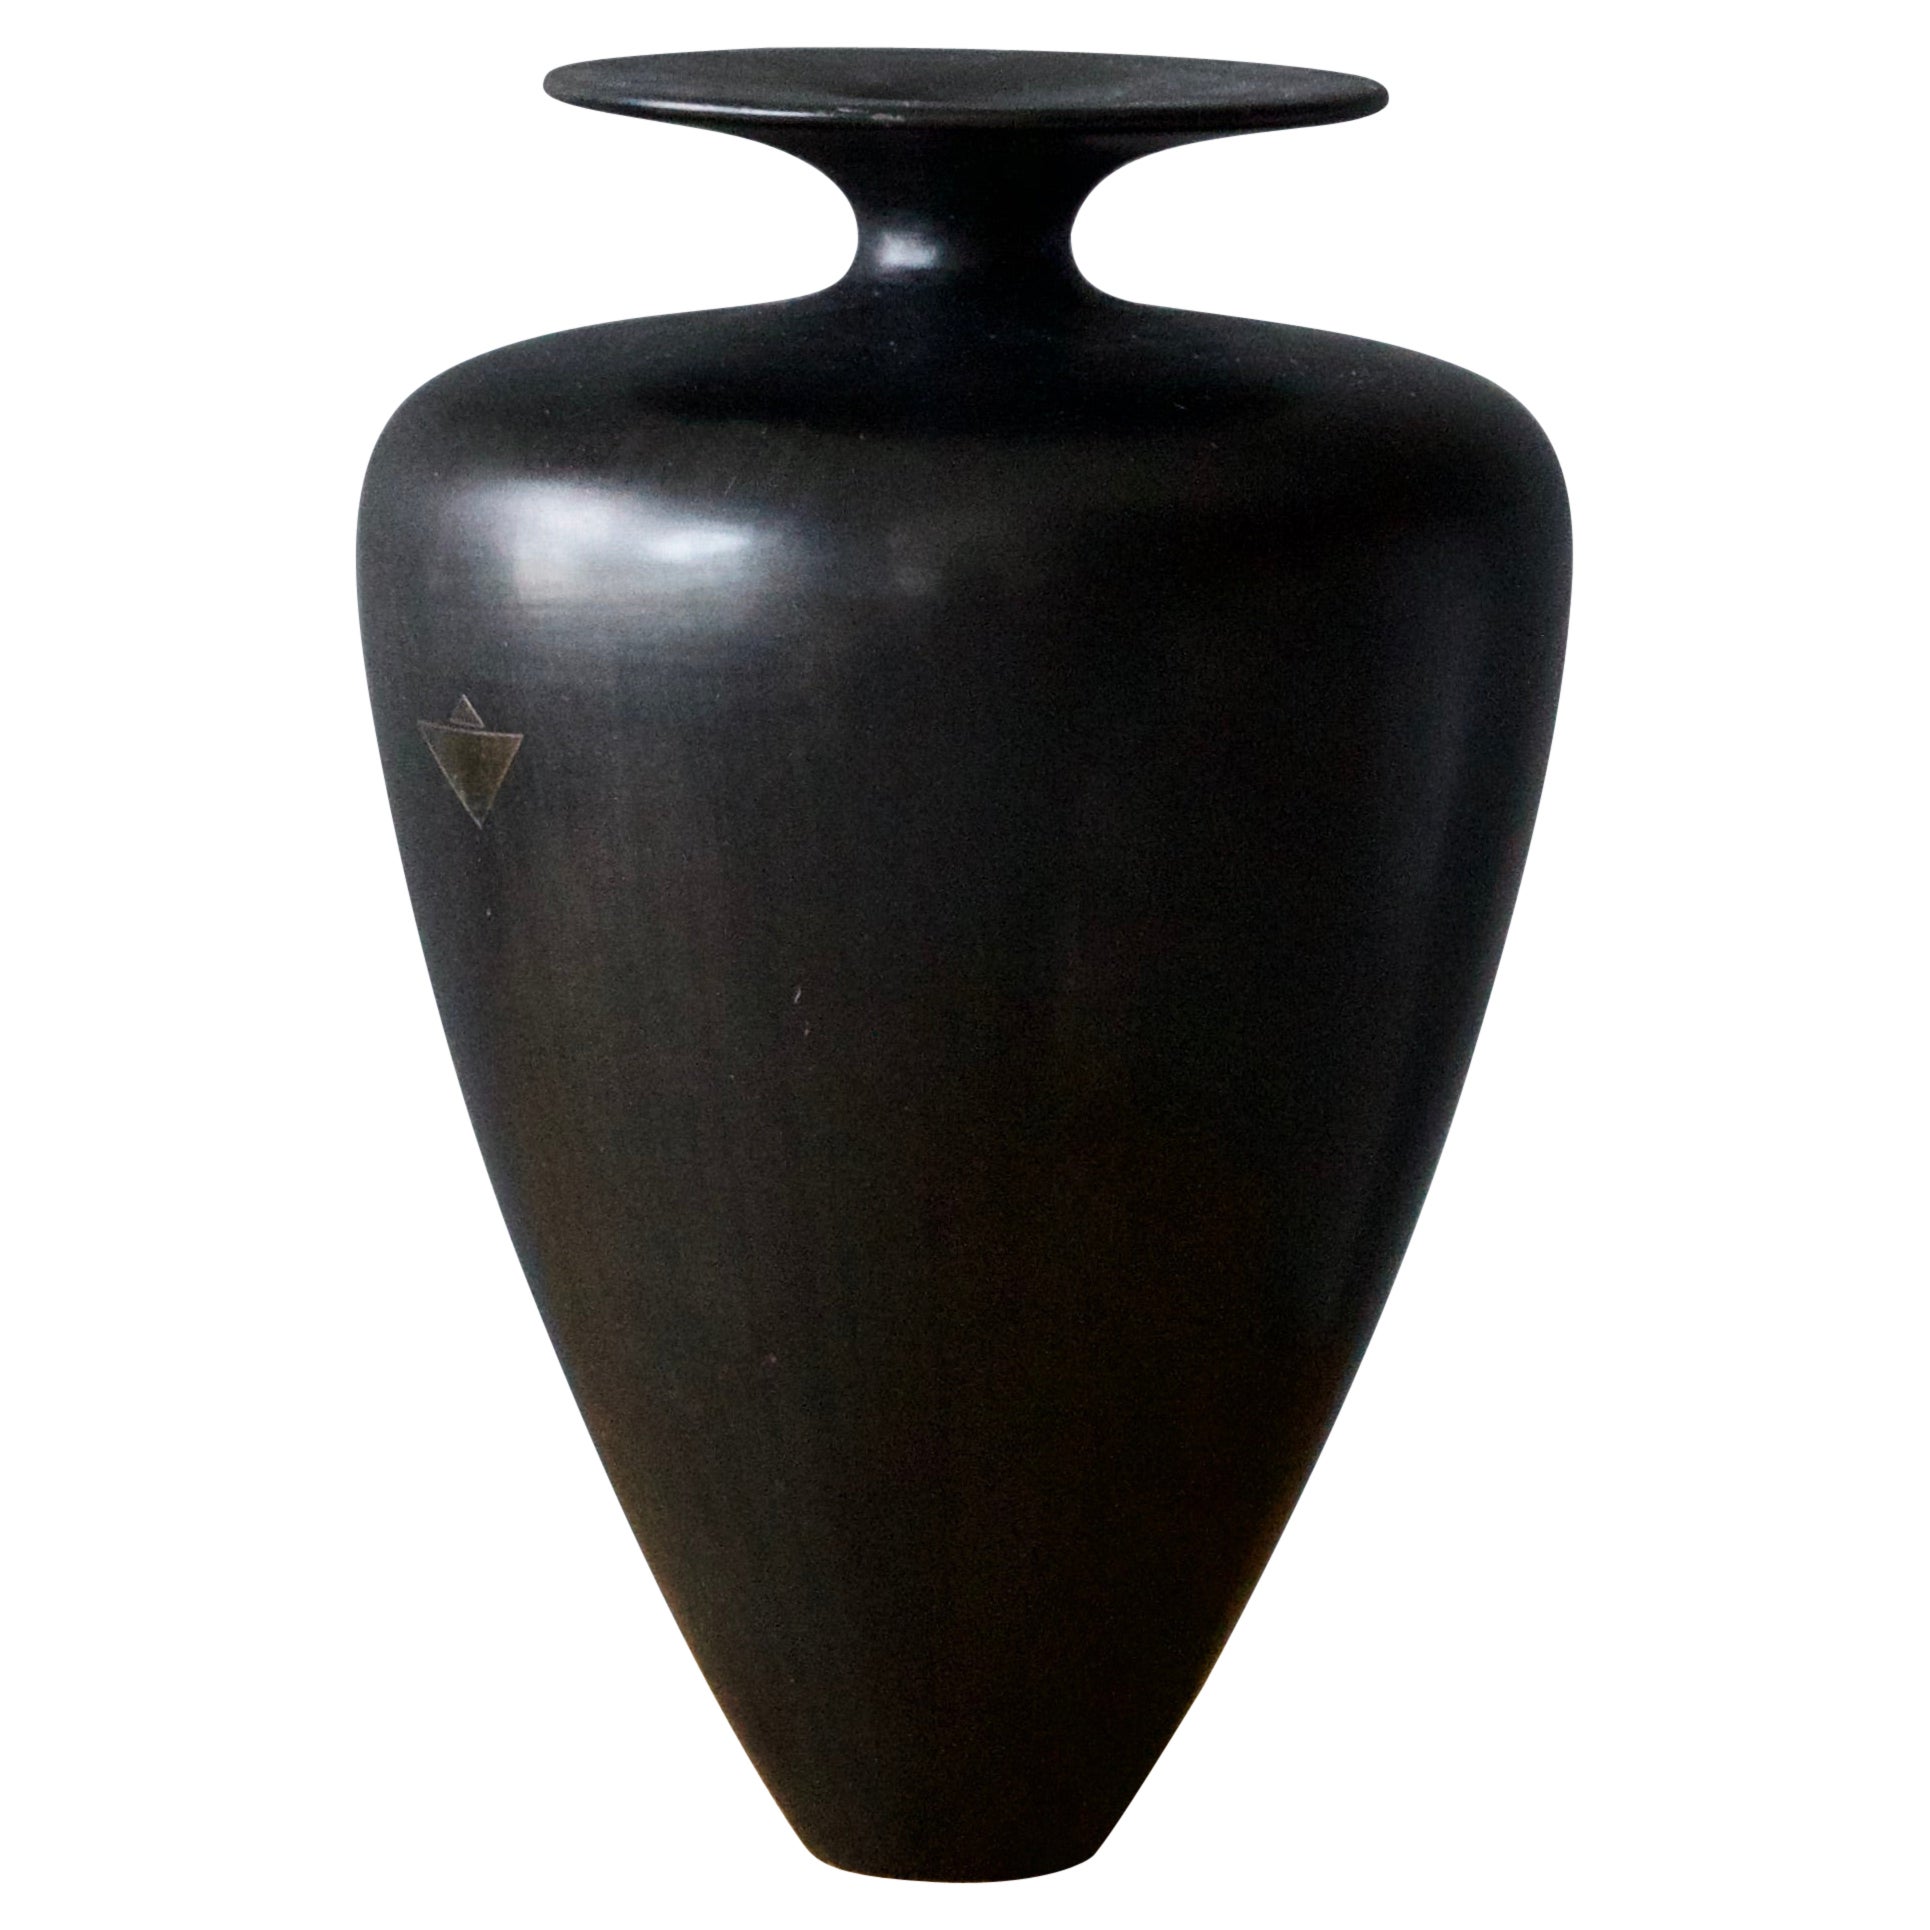 Italian, Modernist Vase, Black Glazed Ceramic, Italy, 1940s